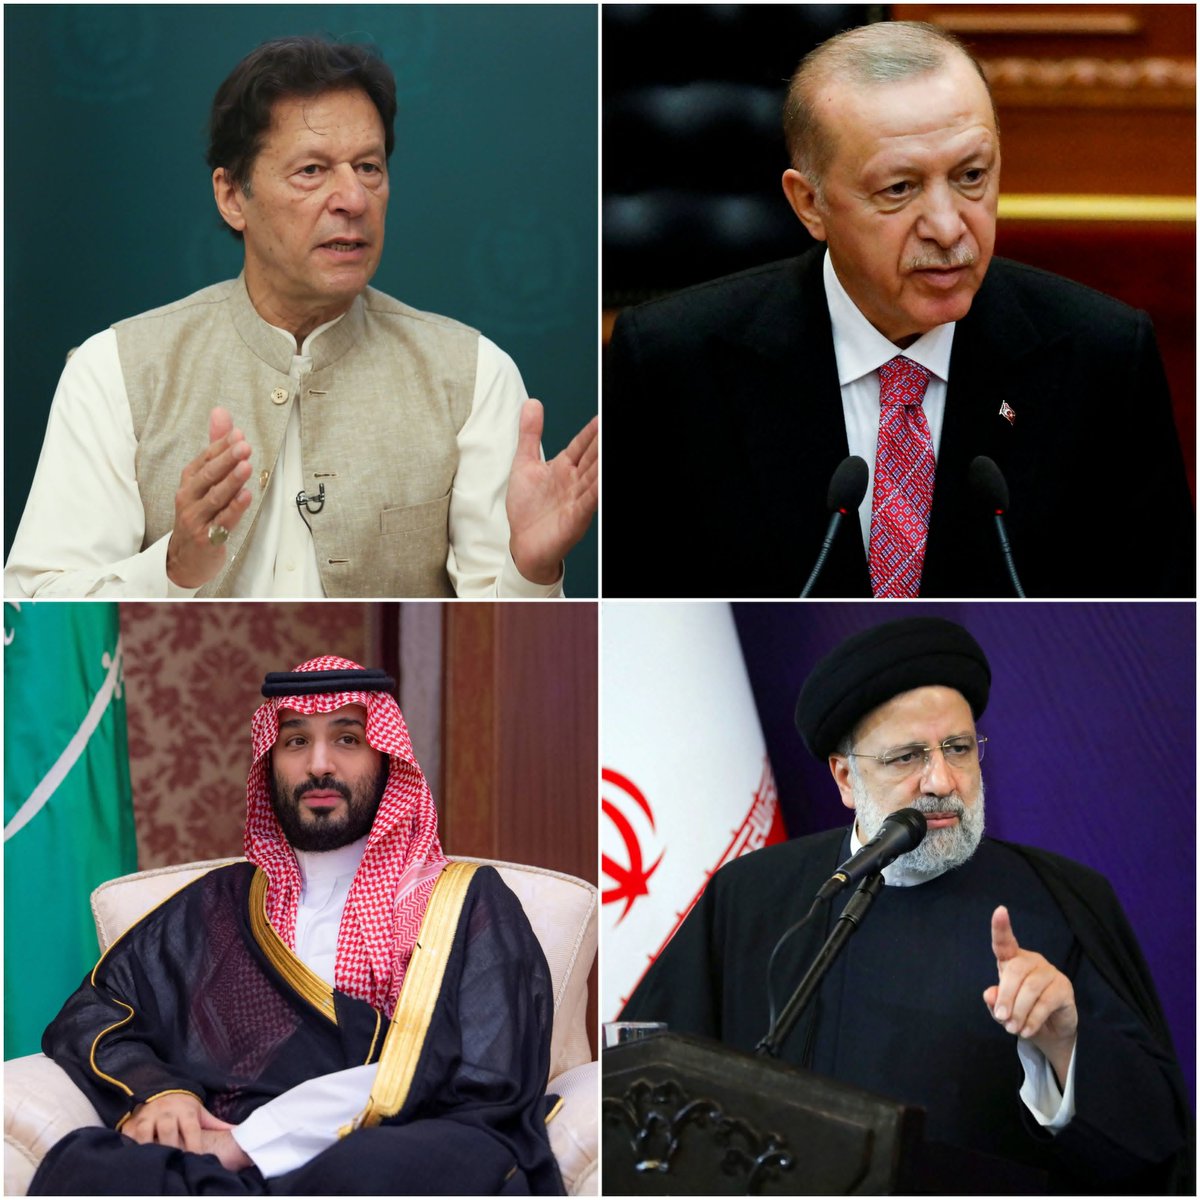 Who is the most loved & famous leader of Muslim world and why? 1. Recep Tayyip Erdogan 2. Imran Khan 3. Mohammed bin Salman Al Saud 4. Ebrahim Raisi